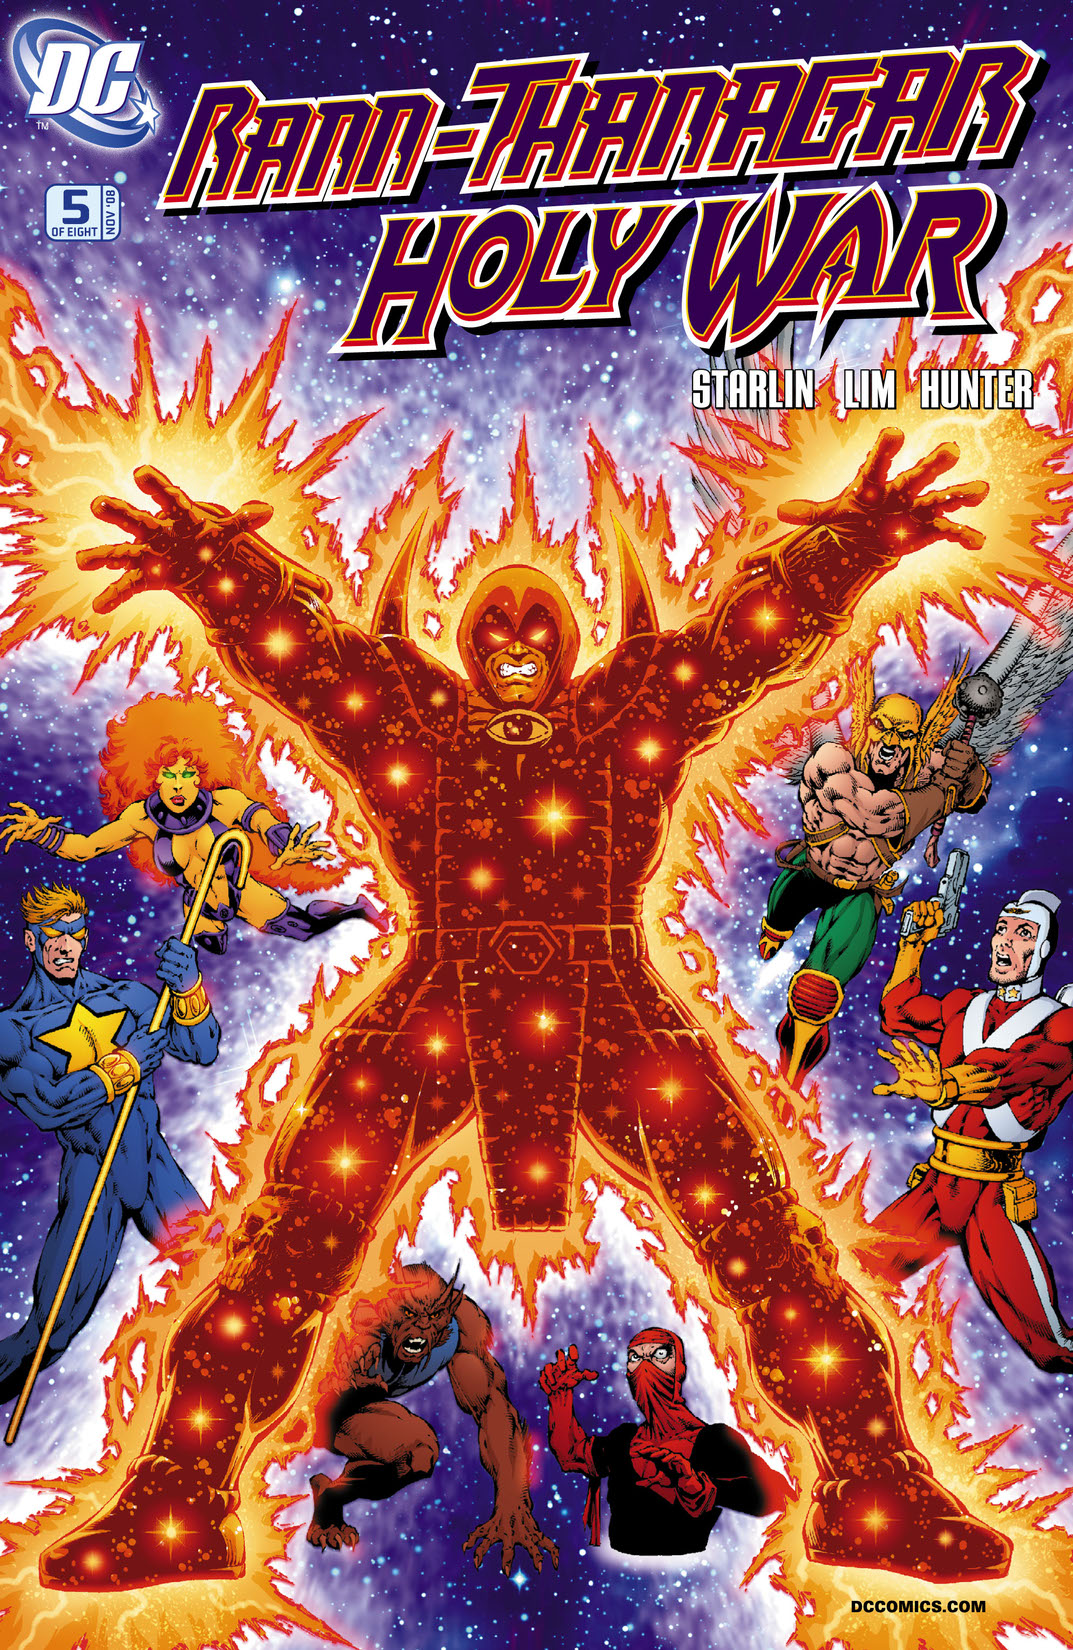 Rann/Thanagar Holy War #5 preview images